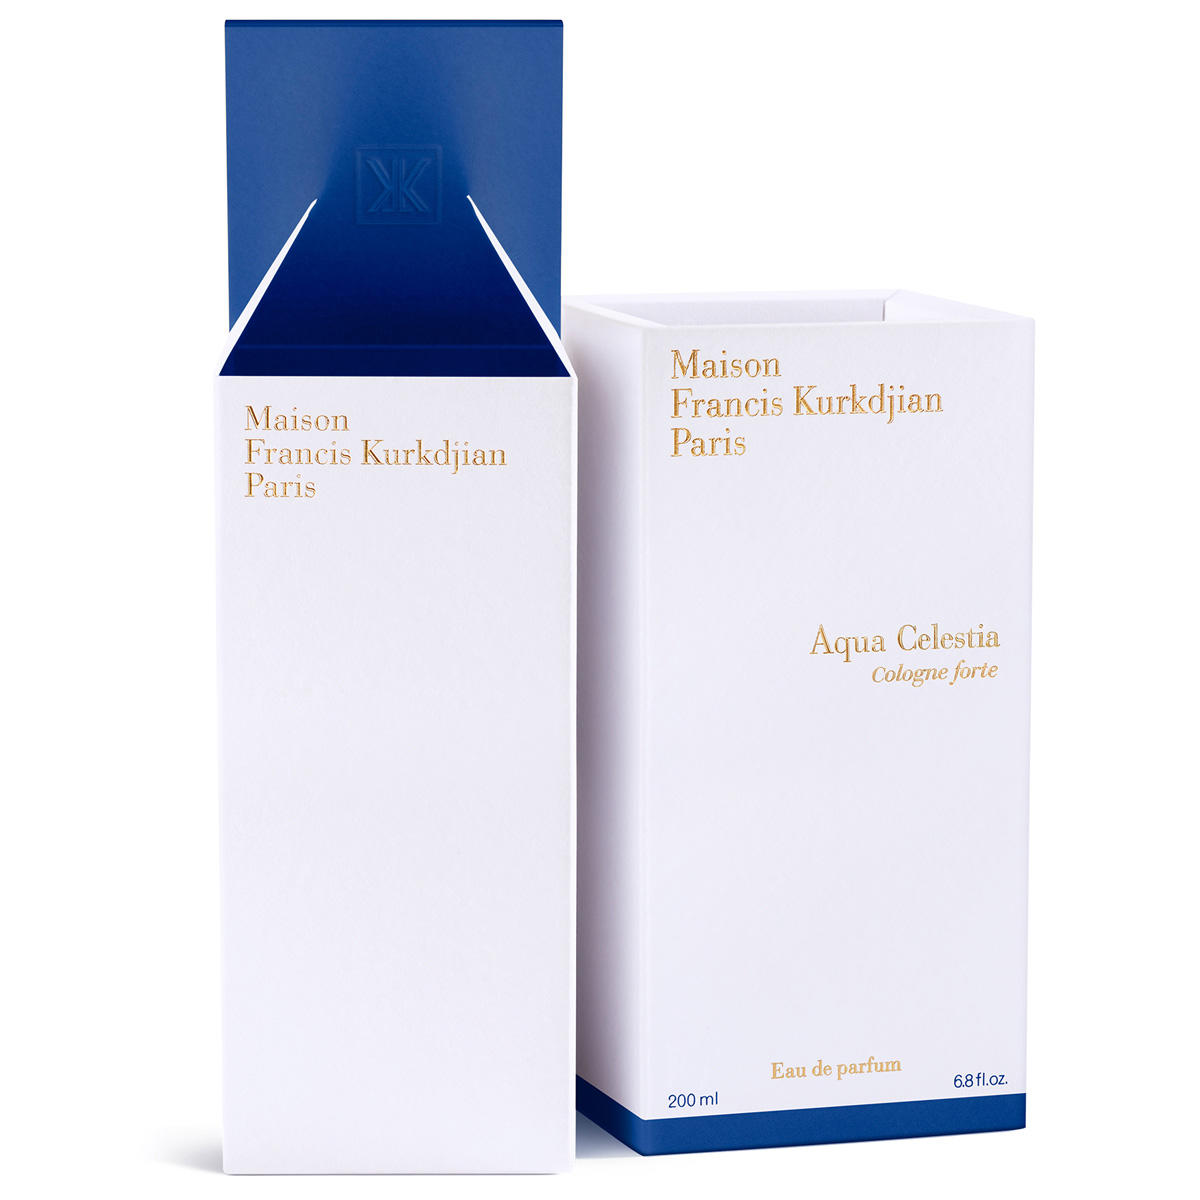 Maison Francis Kurkdjian Paris Aqua Celestia Cologne forte Eau de Parfum 200 ml - 4